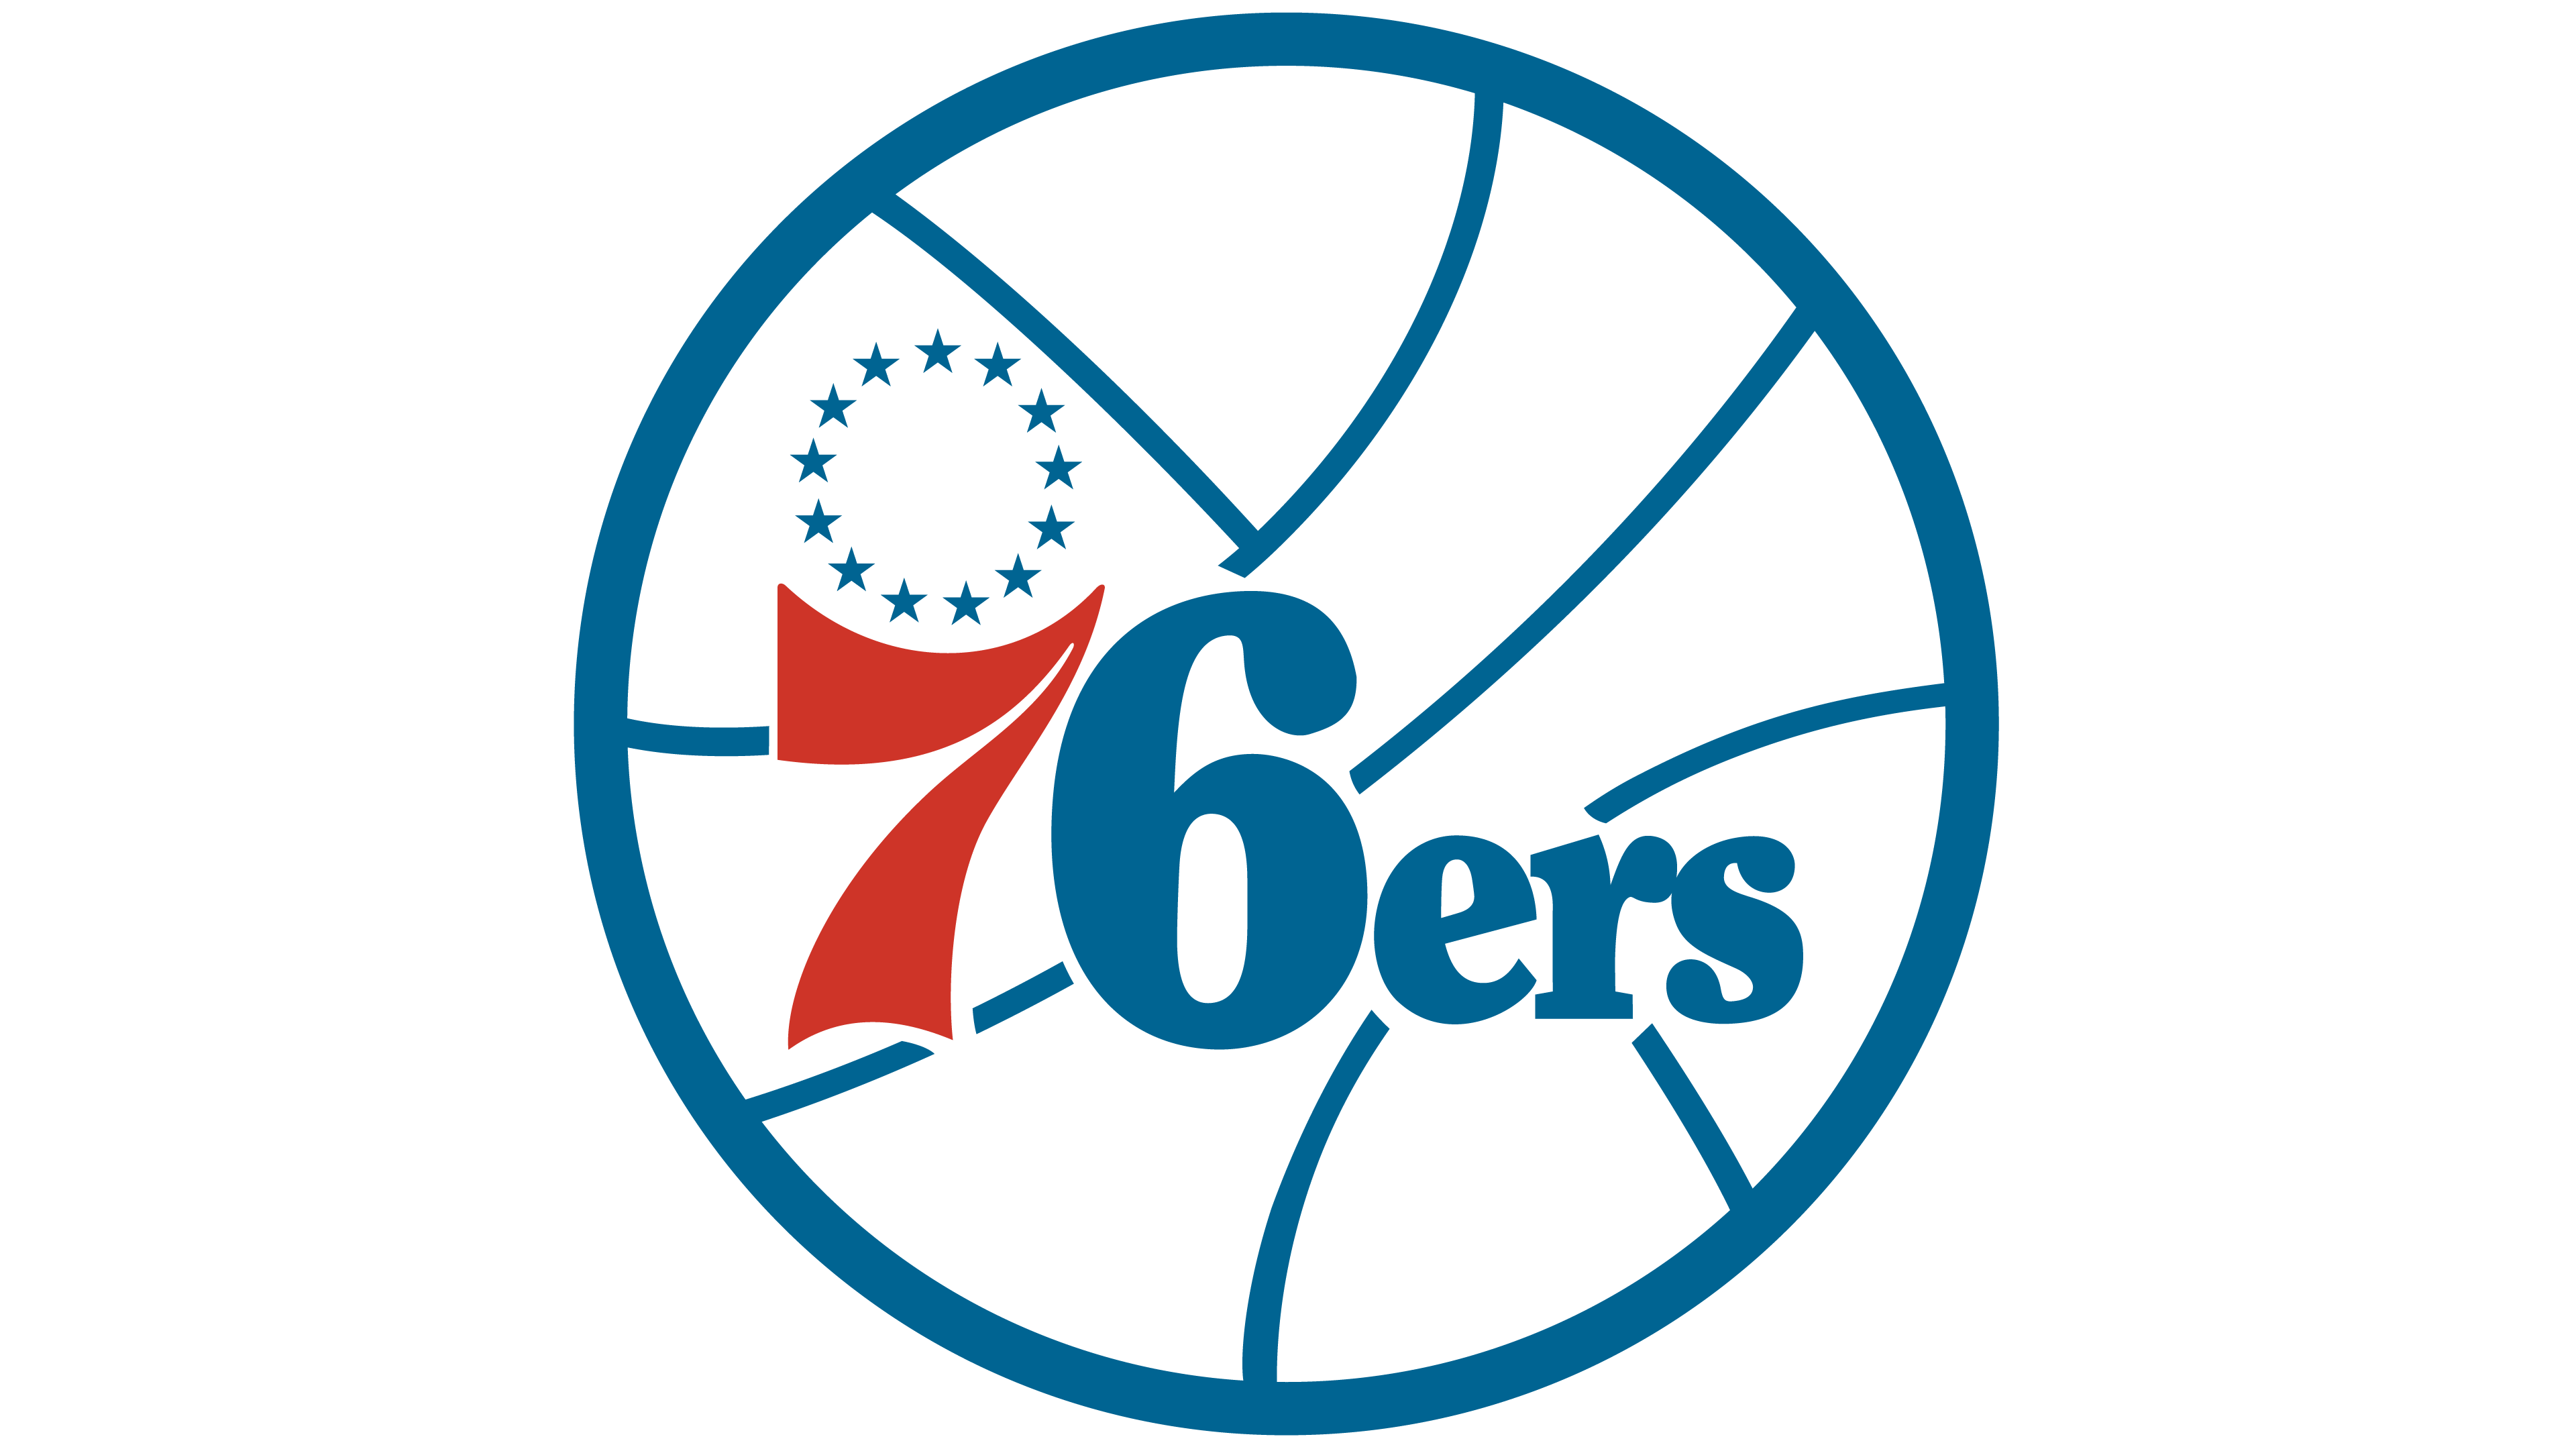 Philadelphia 76ers Logo - Philadelphia 76ers Logo - Interesting History Team Name and emblem